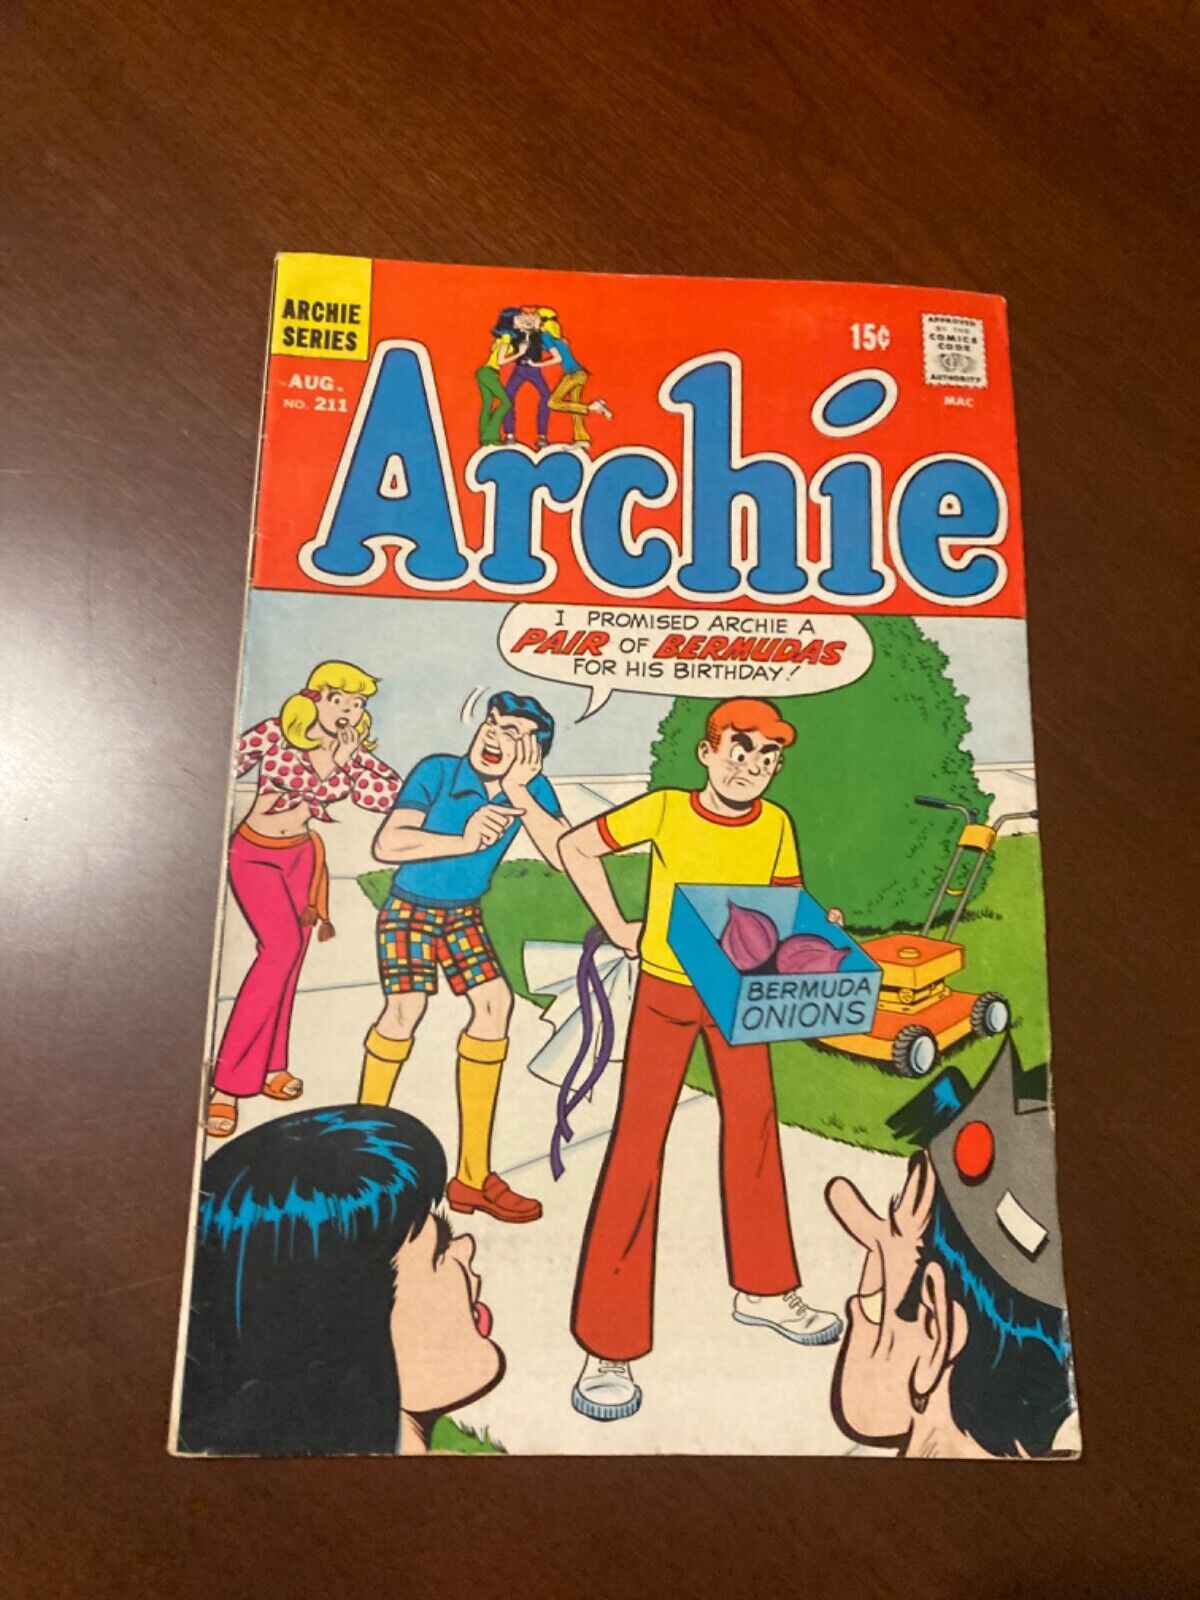 Archie (Archie) #211, Aug. 1971 (1943 Series) $0.15, FVF-7. Condition Comic Book